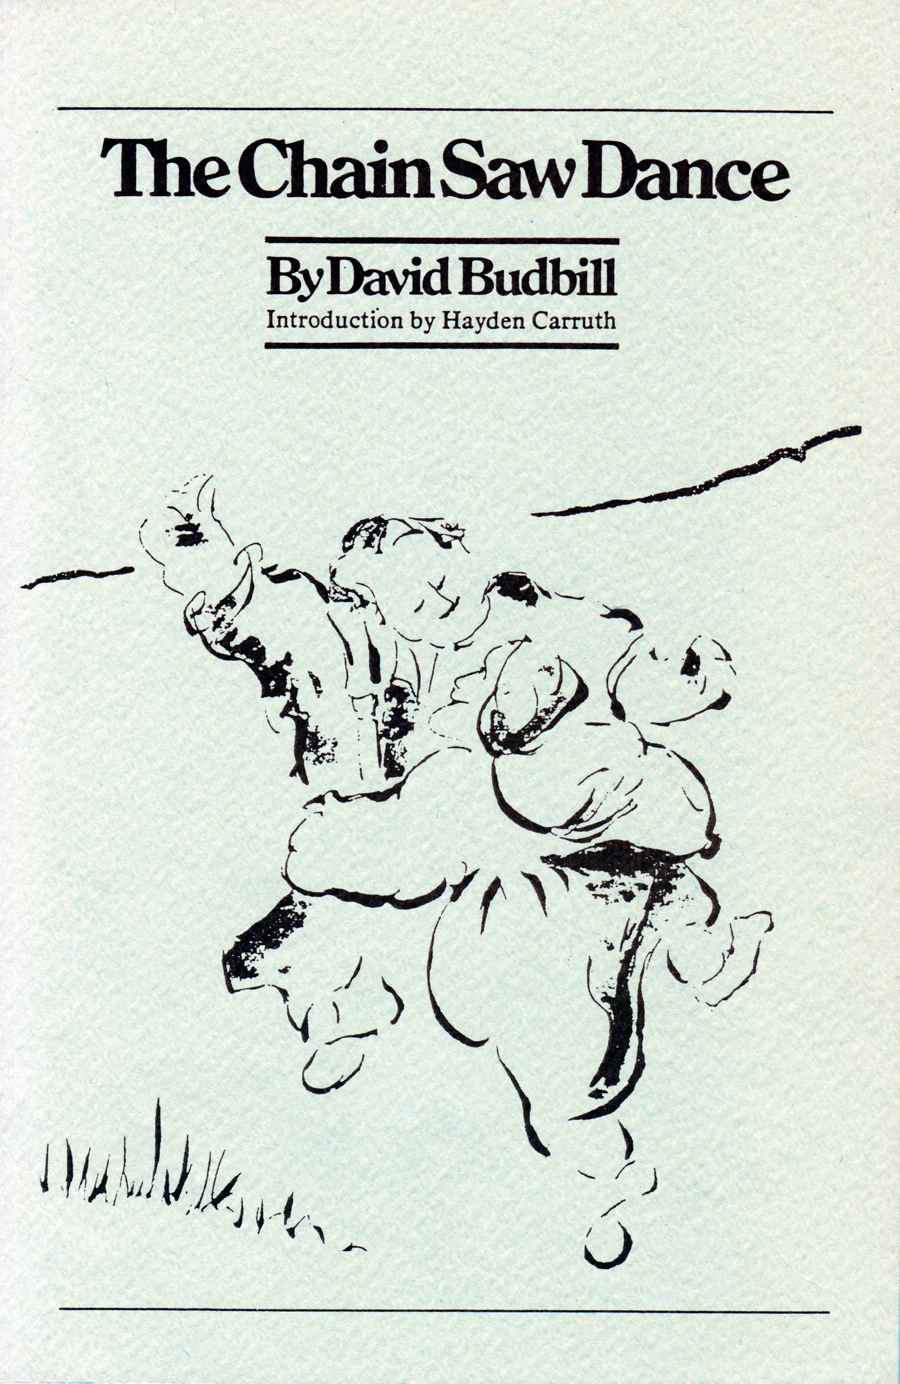 The Chain Saw Dance by David Budbill